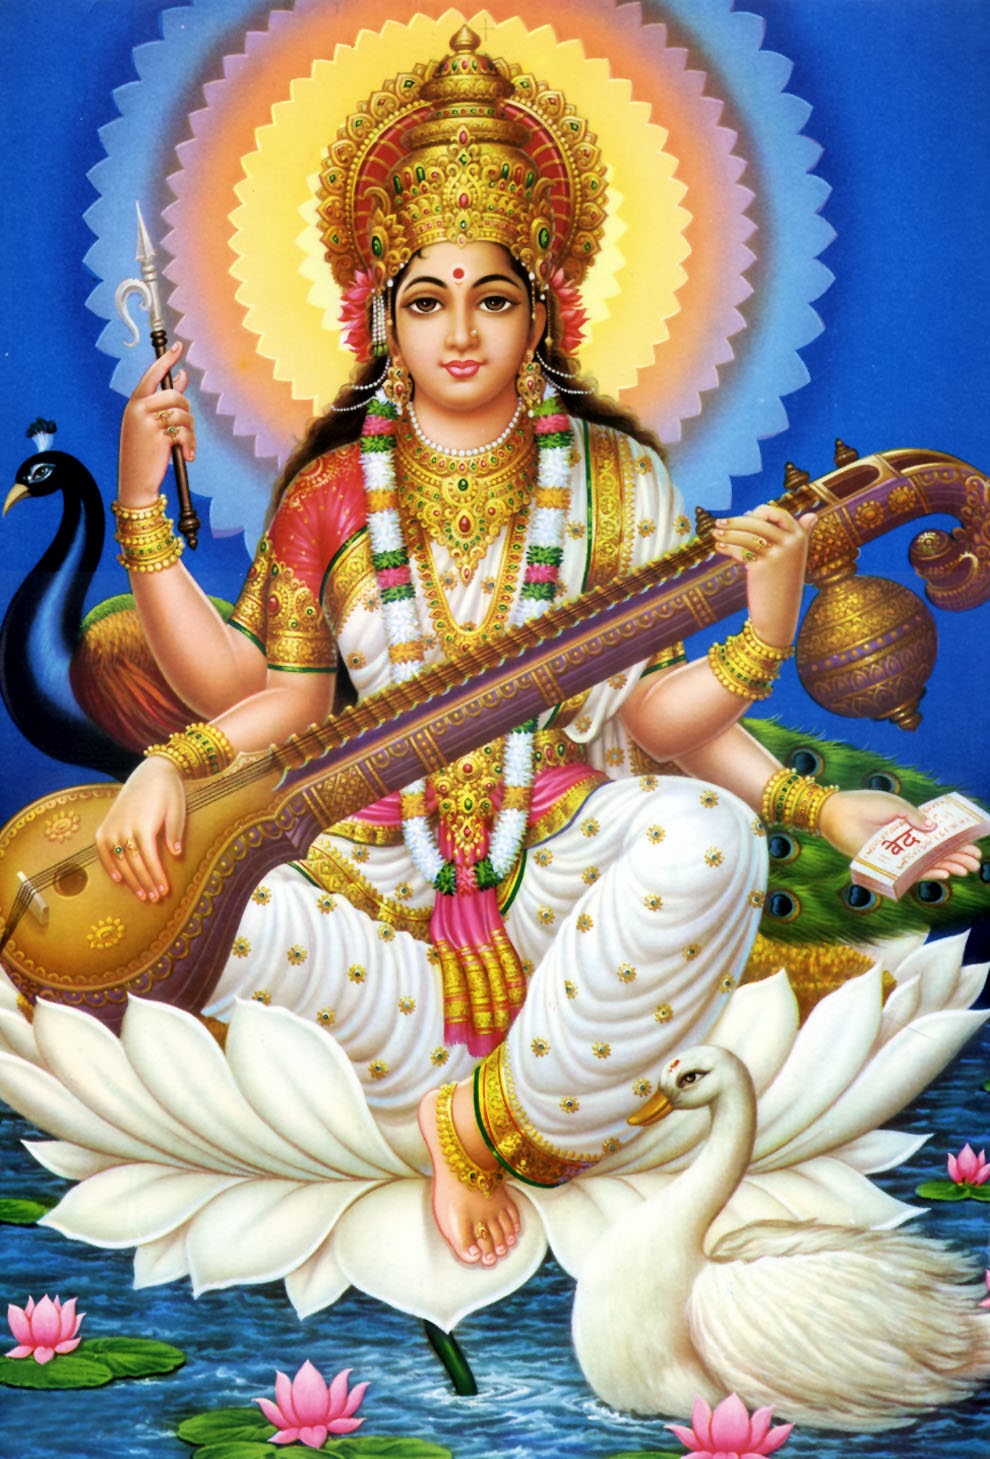 saraswati wallpaper,veena,saraswati veena,rudra veena,plucked string instruments,musical instrument